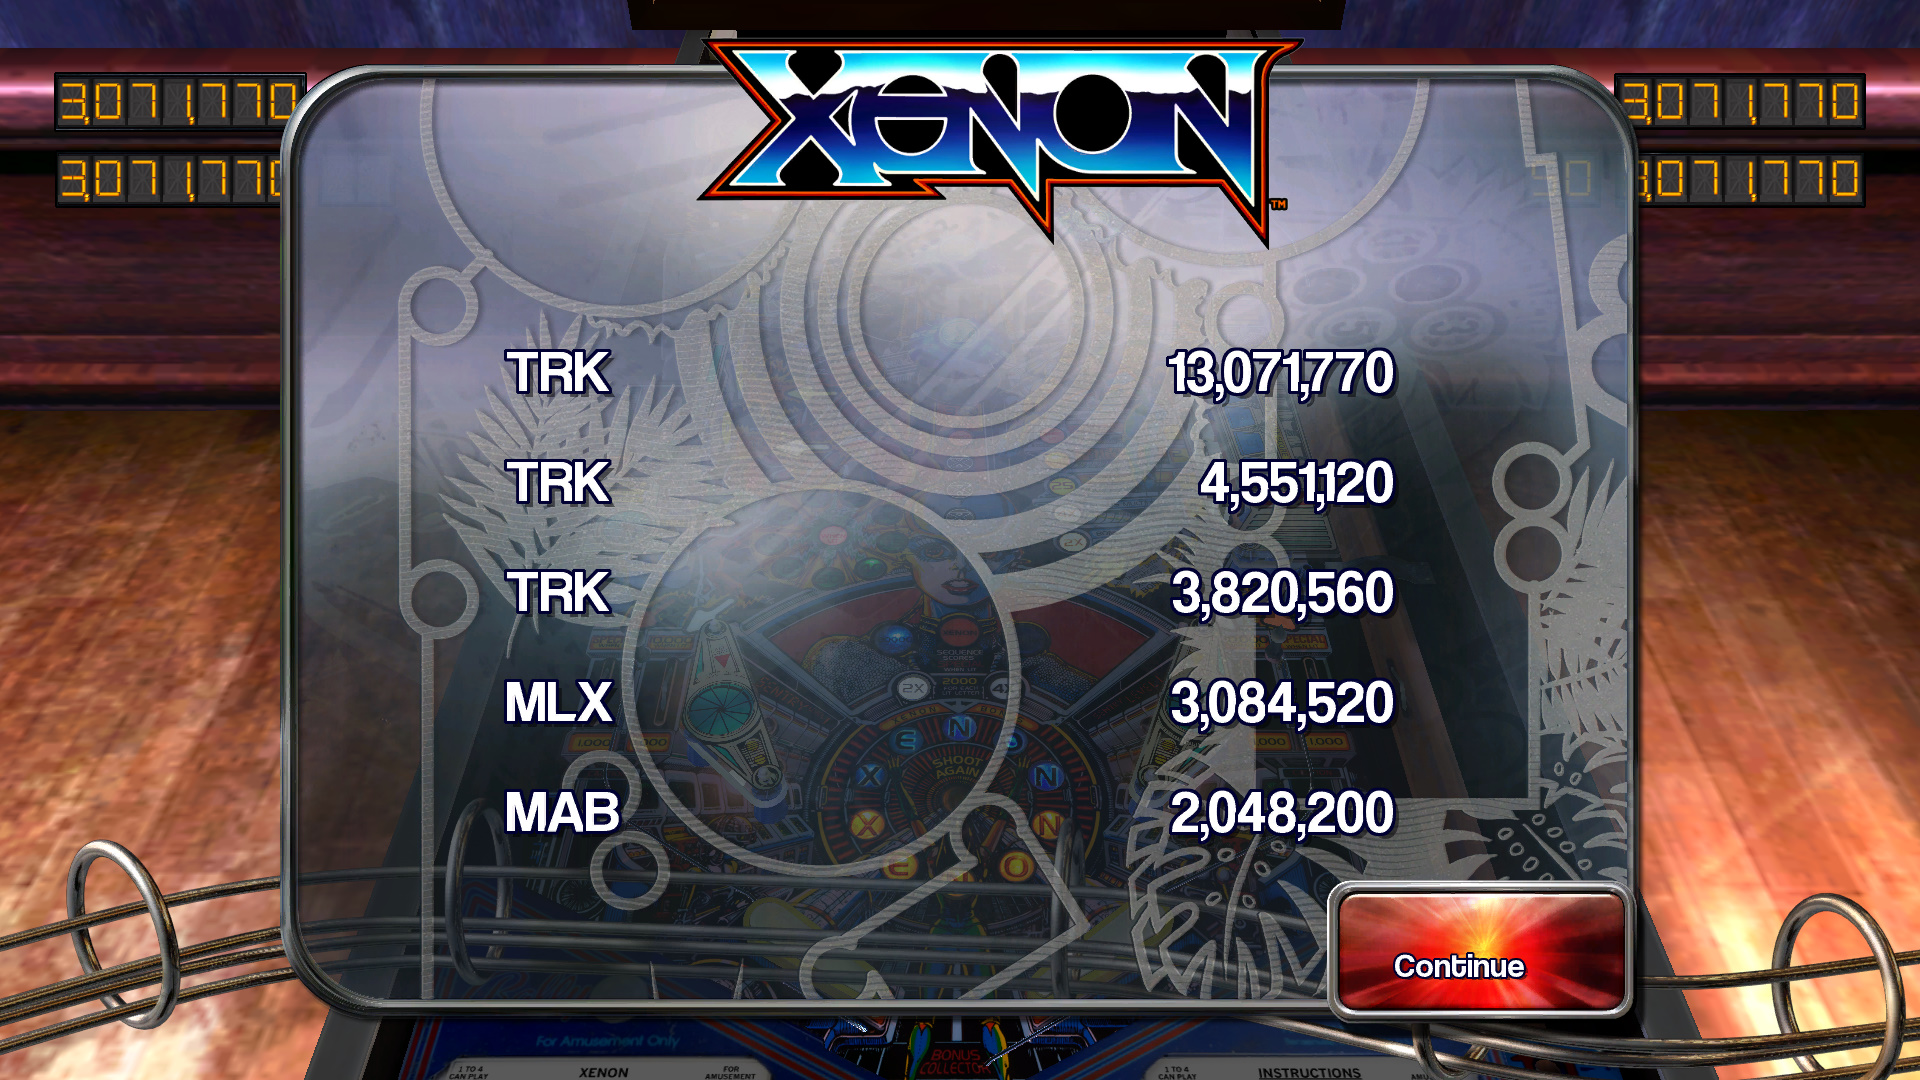 TheTrickster: Pinball Arcade: Xenon (PC) 13,071,770 points on 2015-09-23 05:32:00